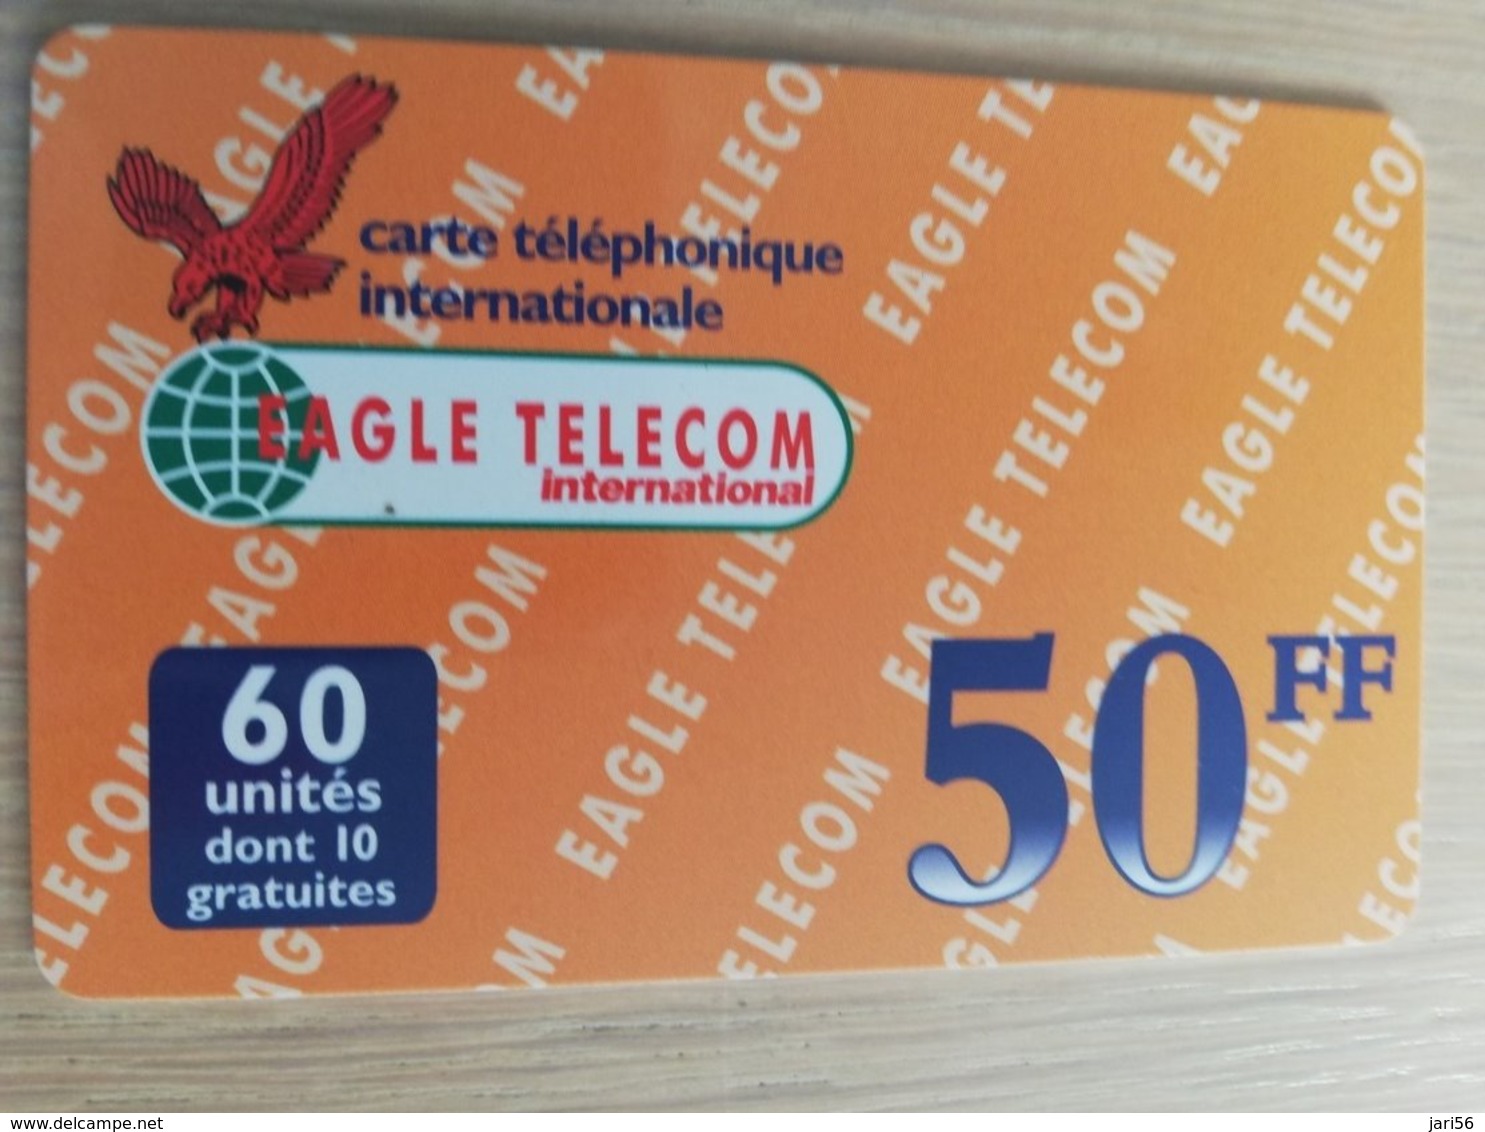 FRANCE/FRANKRIJK  EAGLE TELECOM 50FF  PREPAID  USED    ** 1499** - Per Cellulari (telefonini/schede SIM)